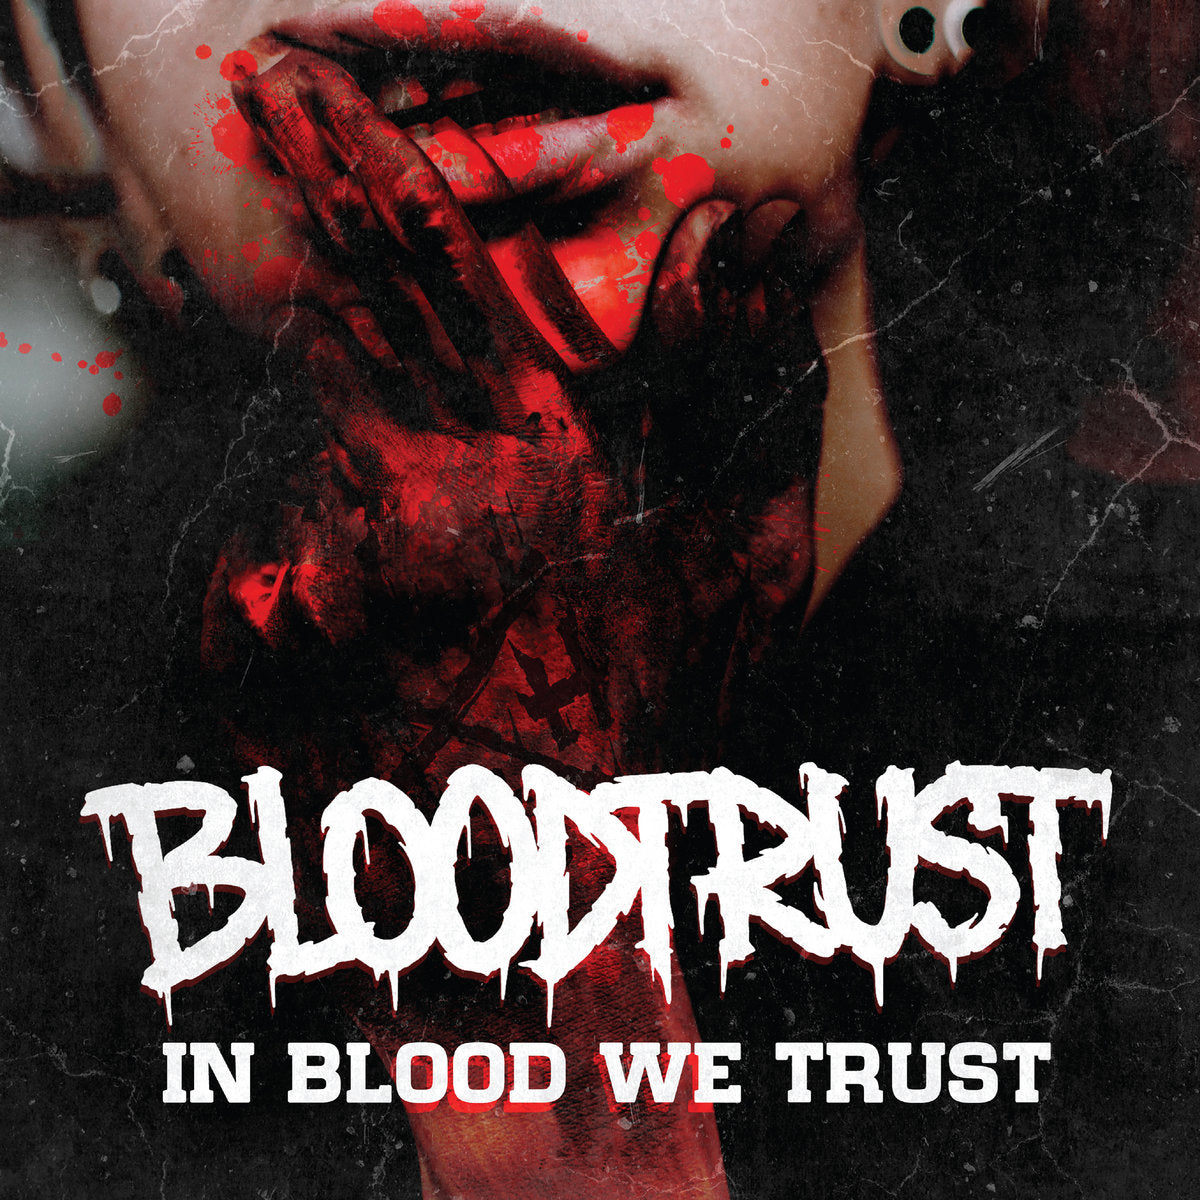 BLOODTRUST - "In Blood We Trust" (LP)